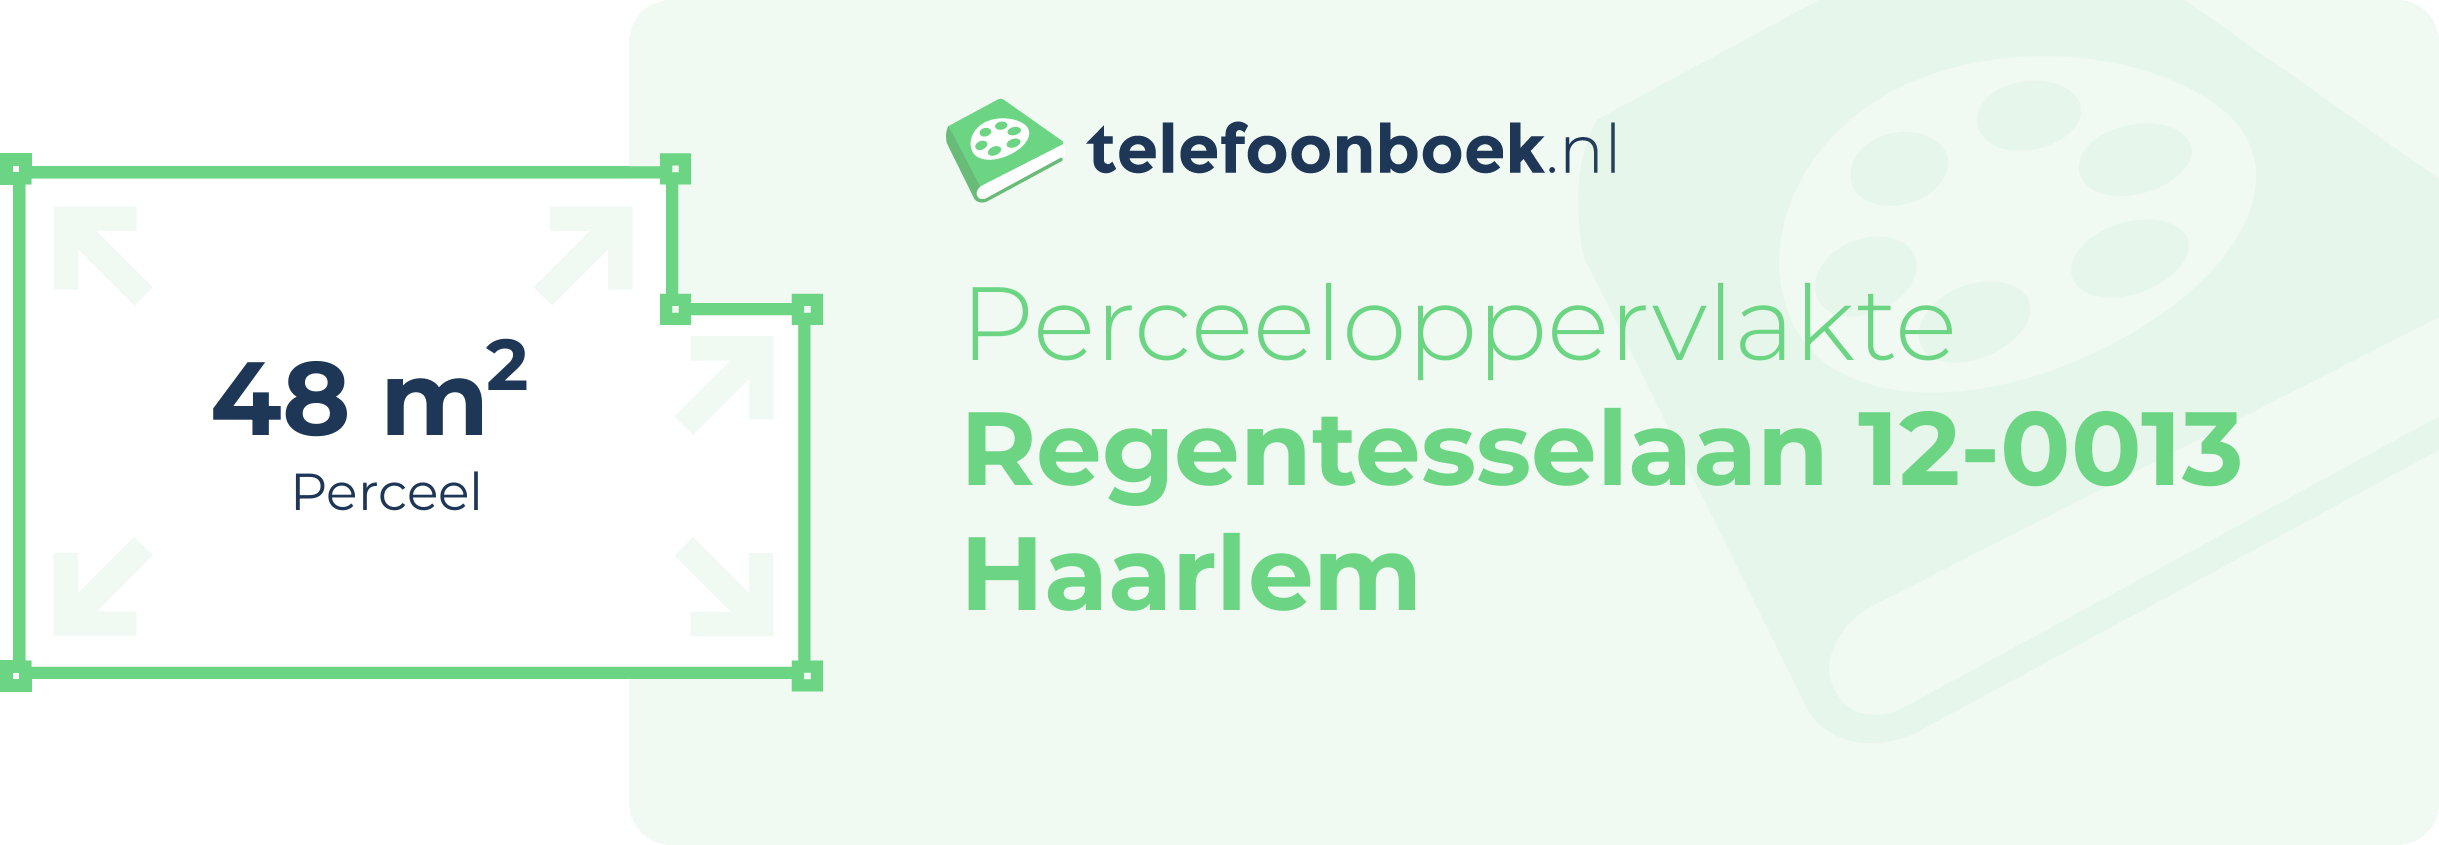 Perceeloppervlakte Regentesselaan 12-0013 Haarlem